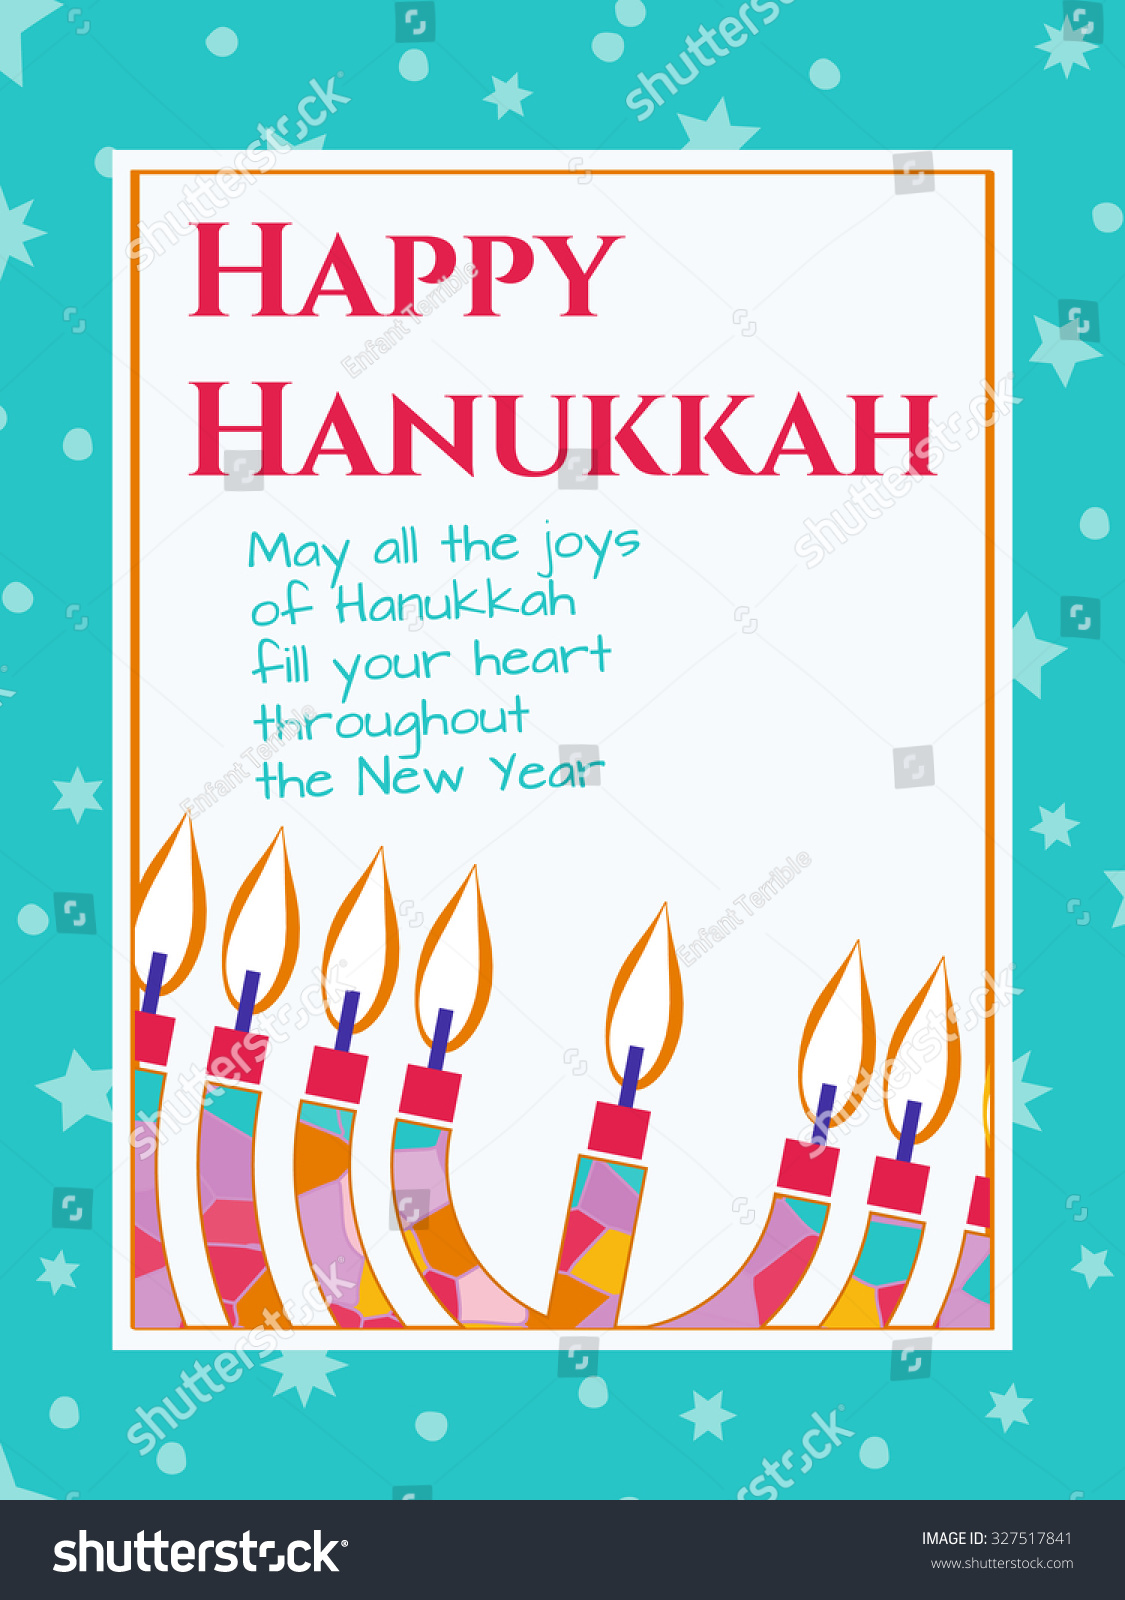 Hanukkah Greeting card design vector template Jewish Light Festival greeting card wallpaper background